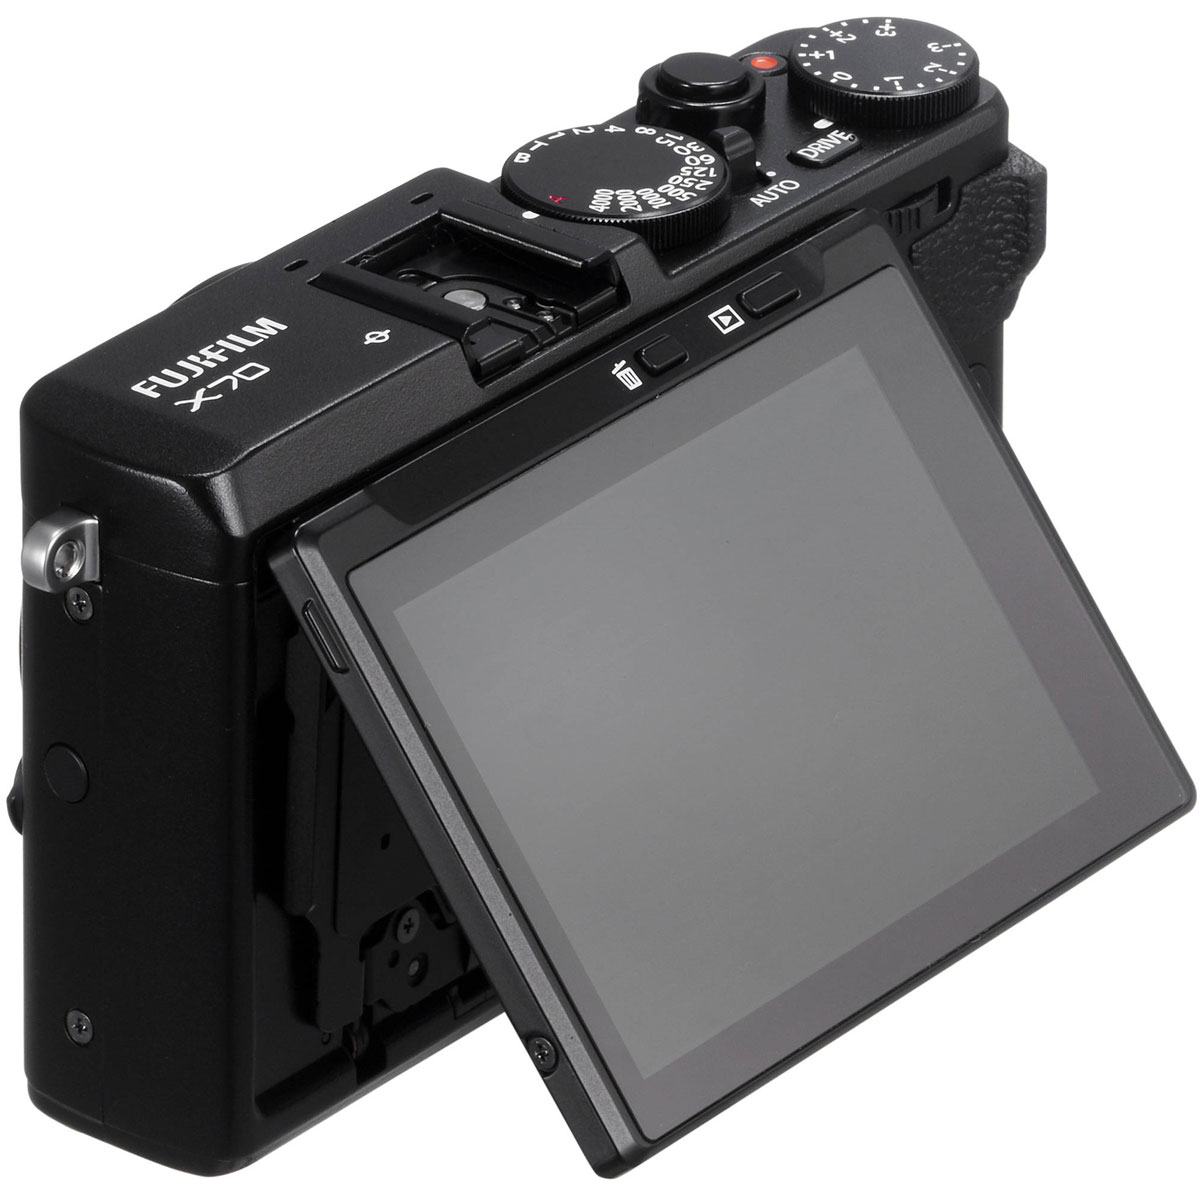 Fujifilm X70 Digital Camera